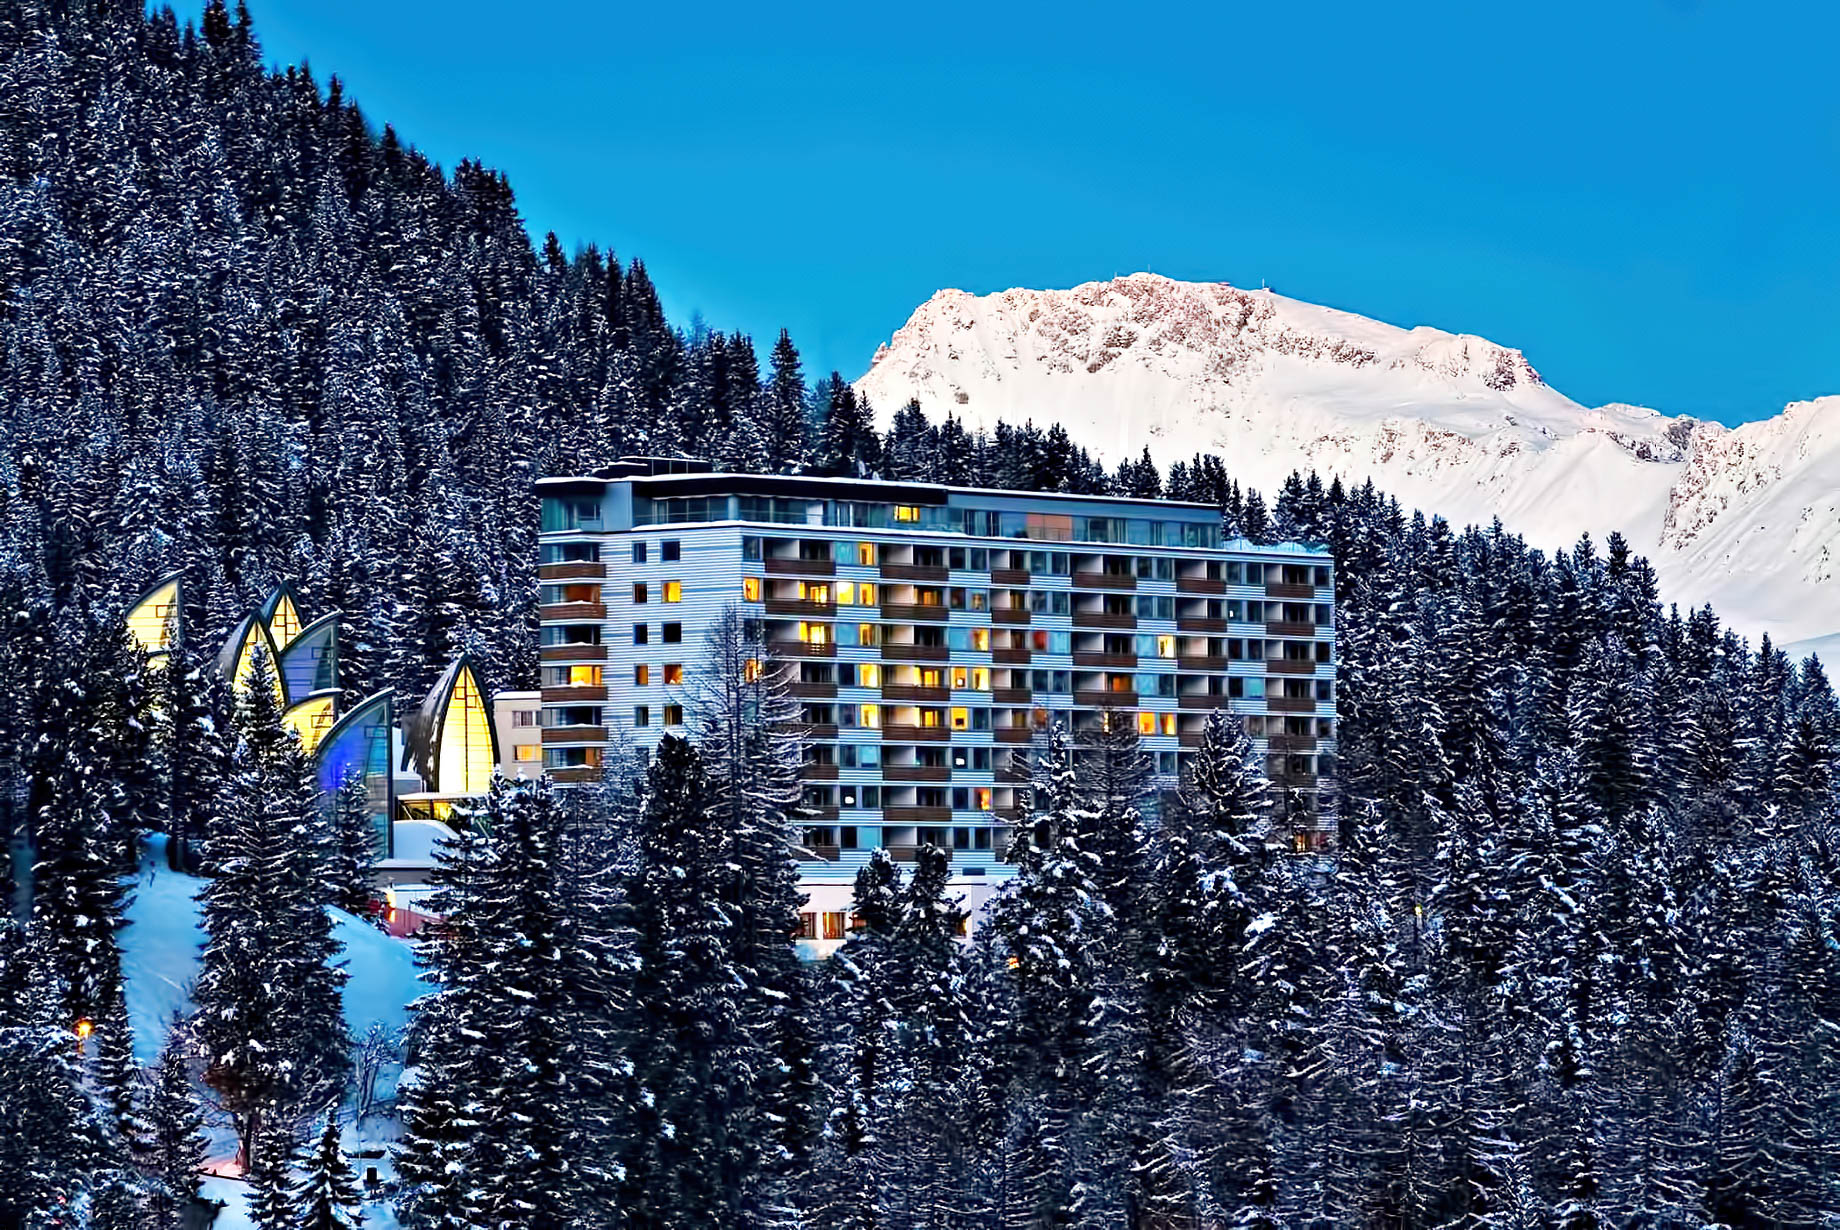 Tschuggen Grand Hotel – Arosa, Switzerland – Heart of the Mountain